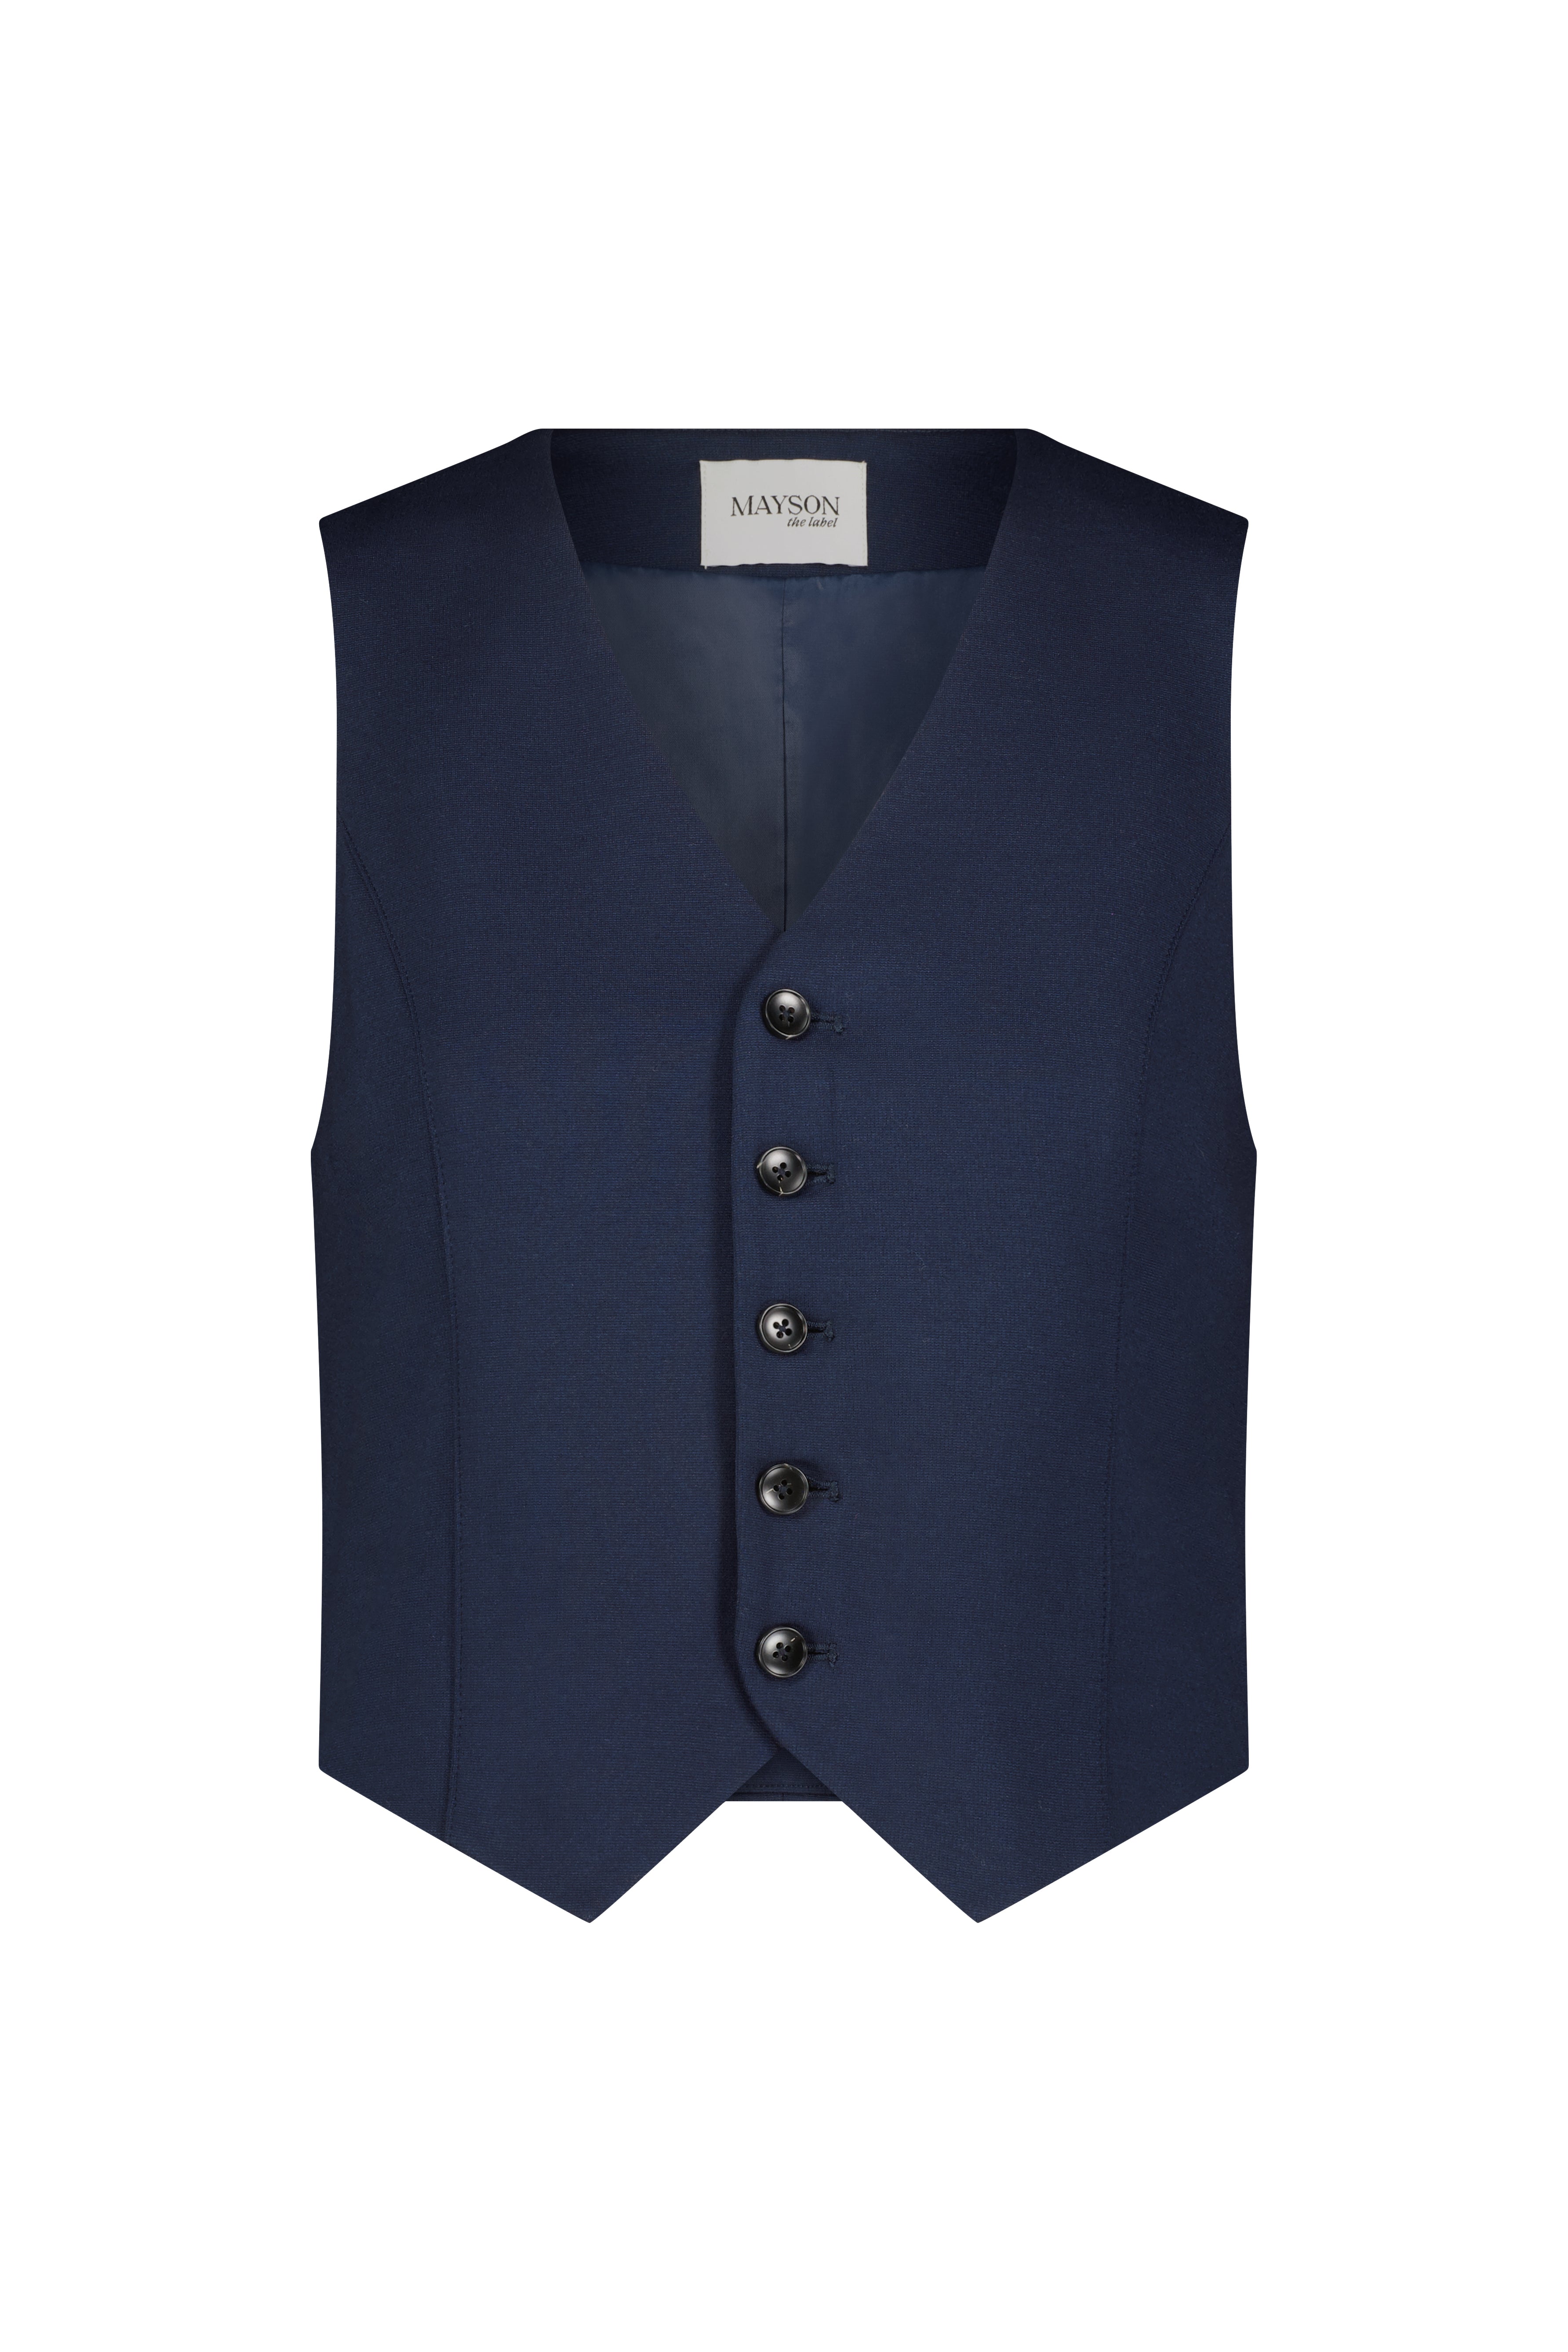 Dior Oblique Down Vest Navy Blue Technical Jacquard | DIOR